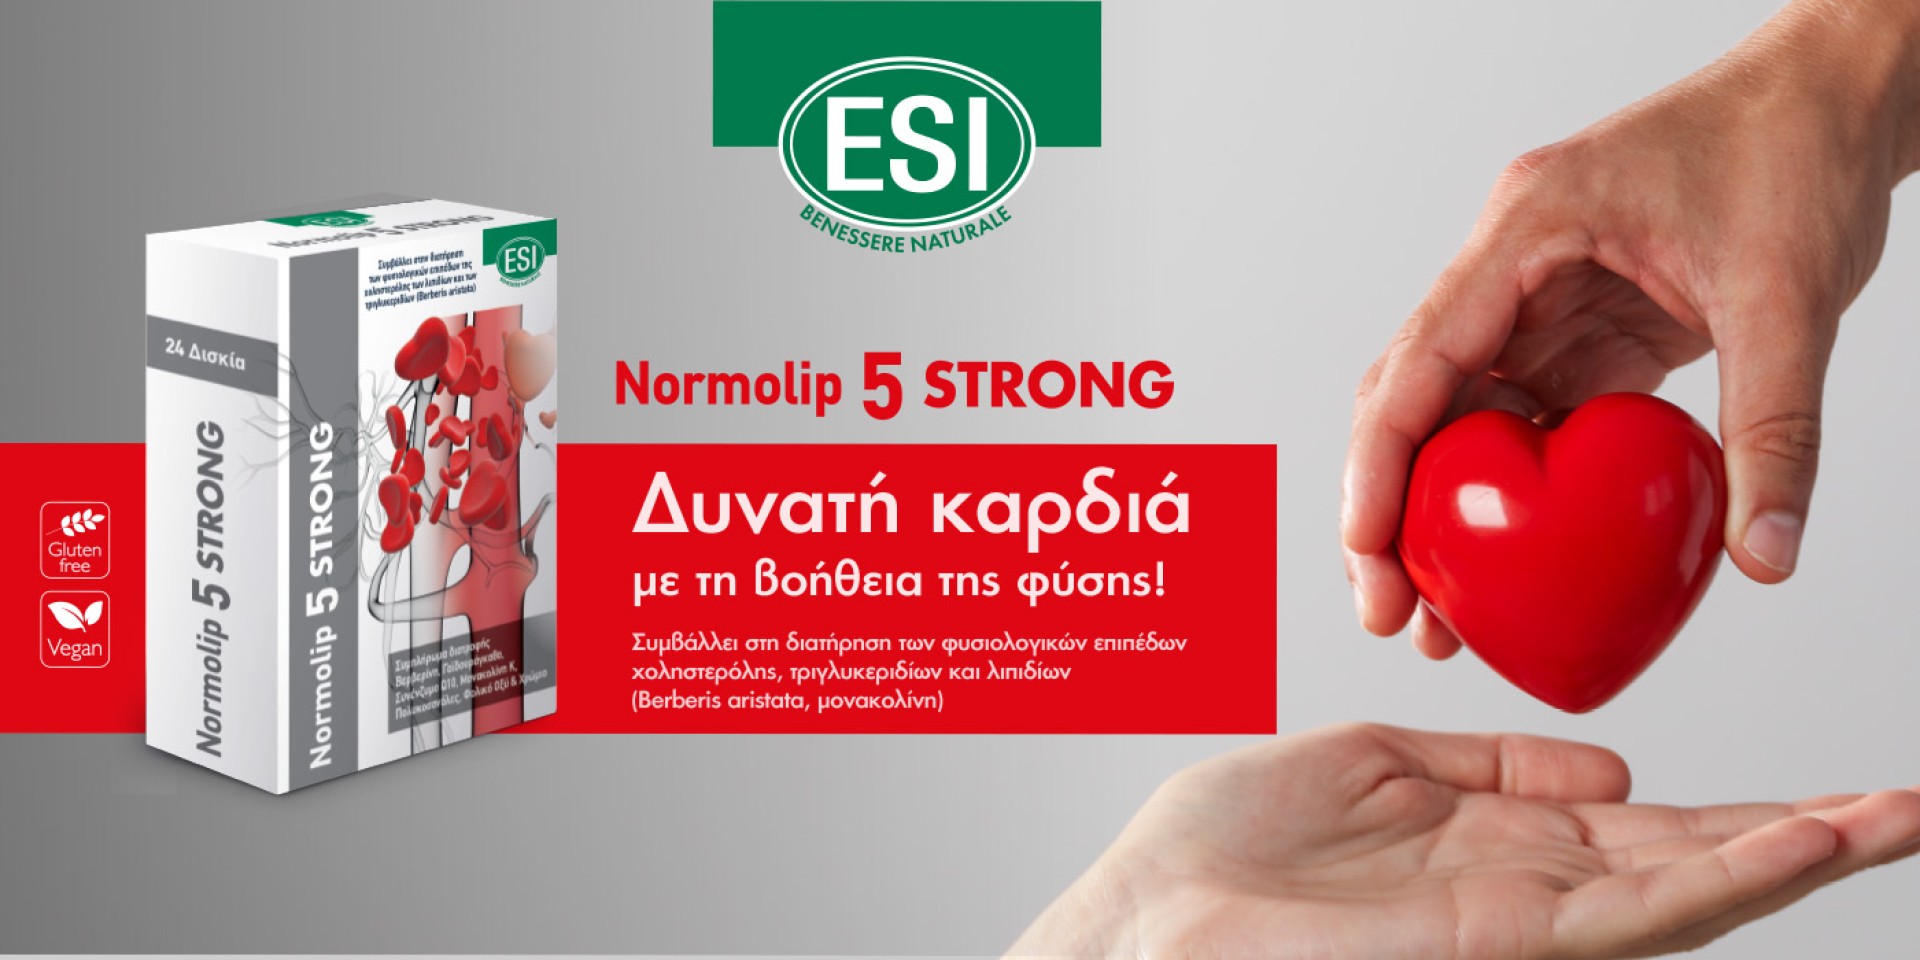 Normolip 5 strong, για δυνατή καρδιά!